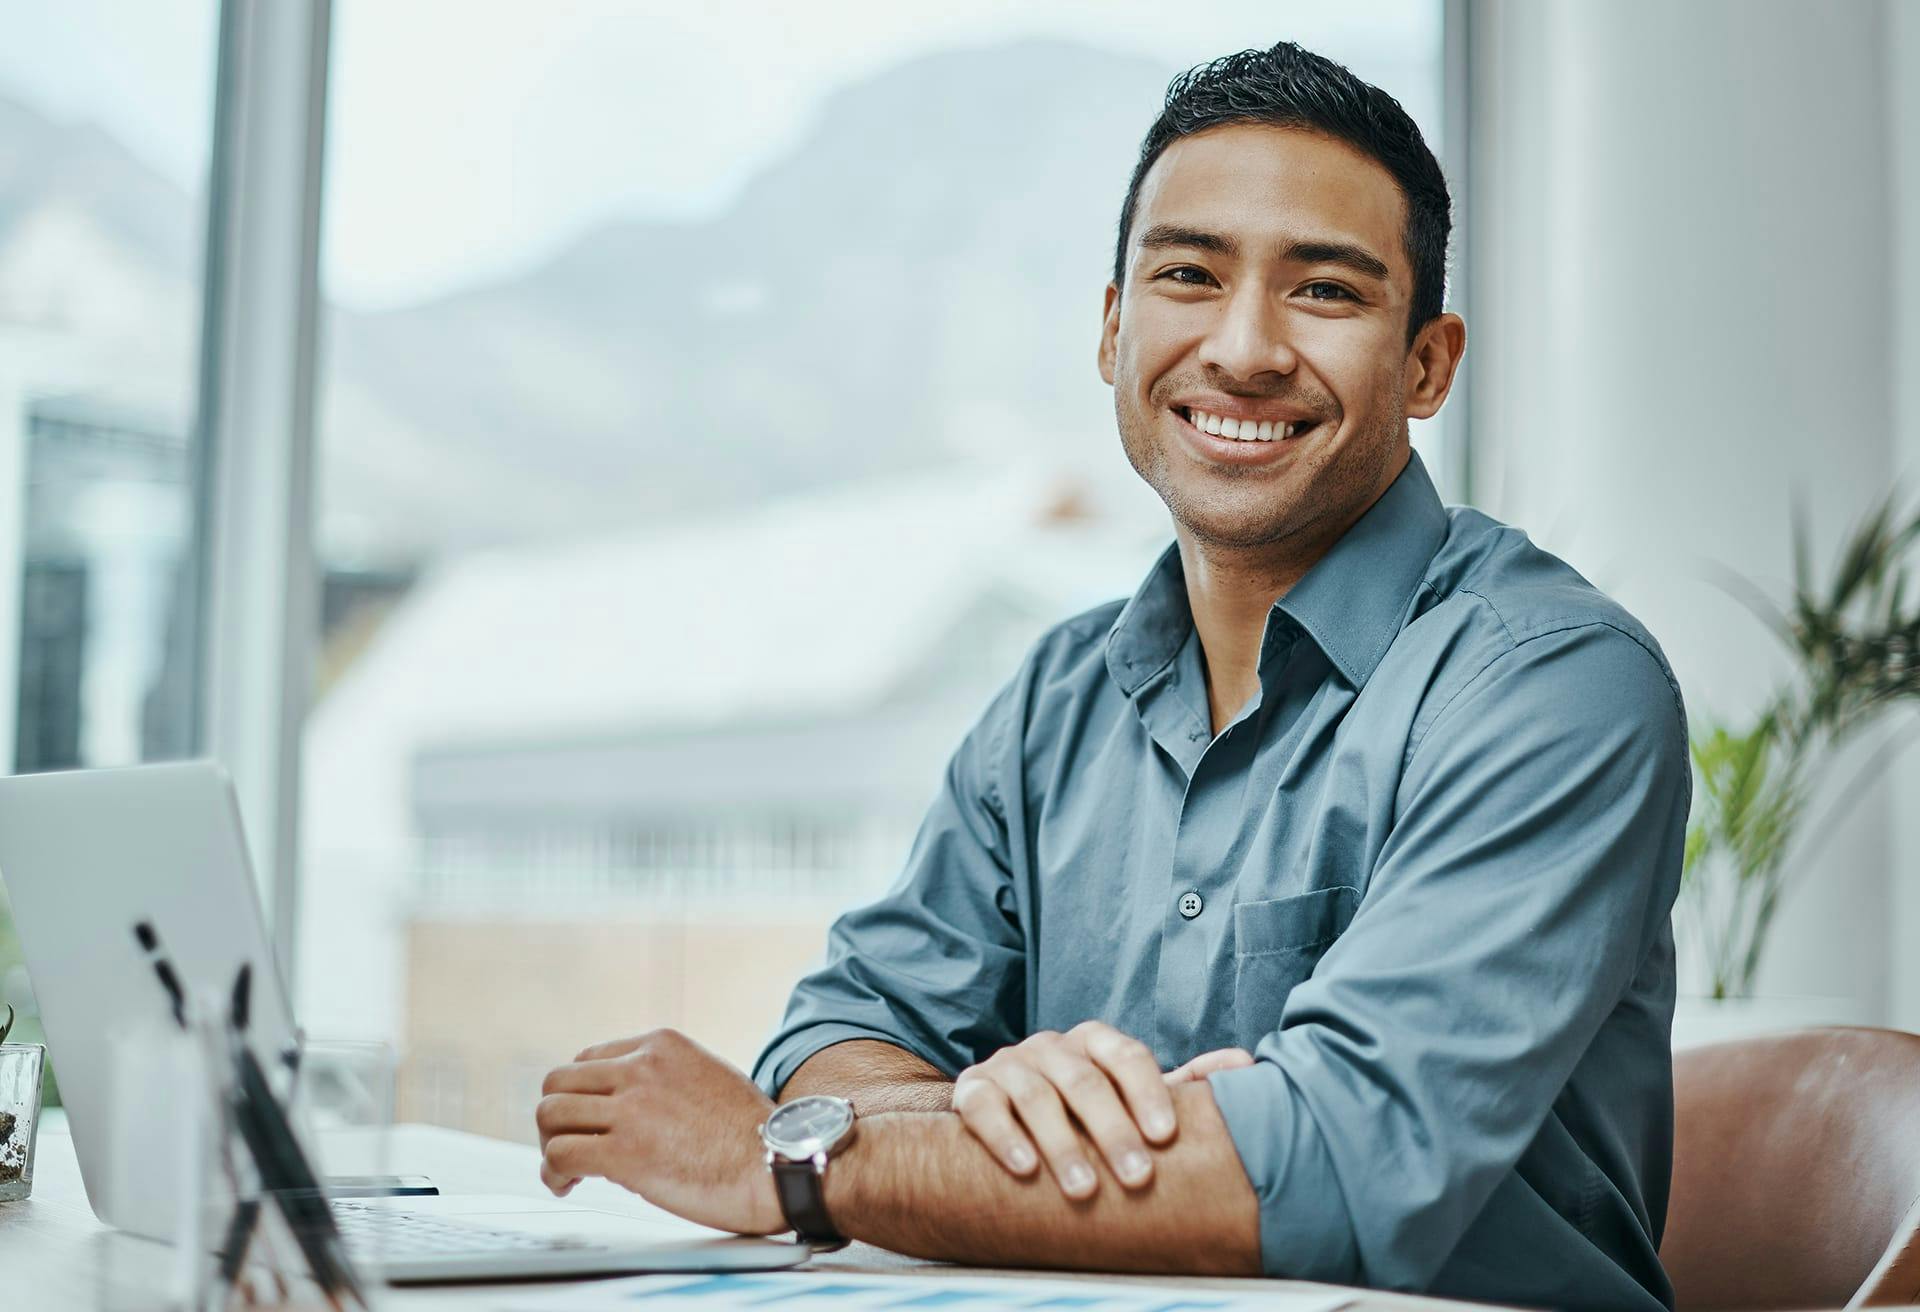 Man sitting at a desk, smiling